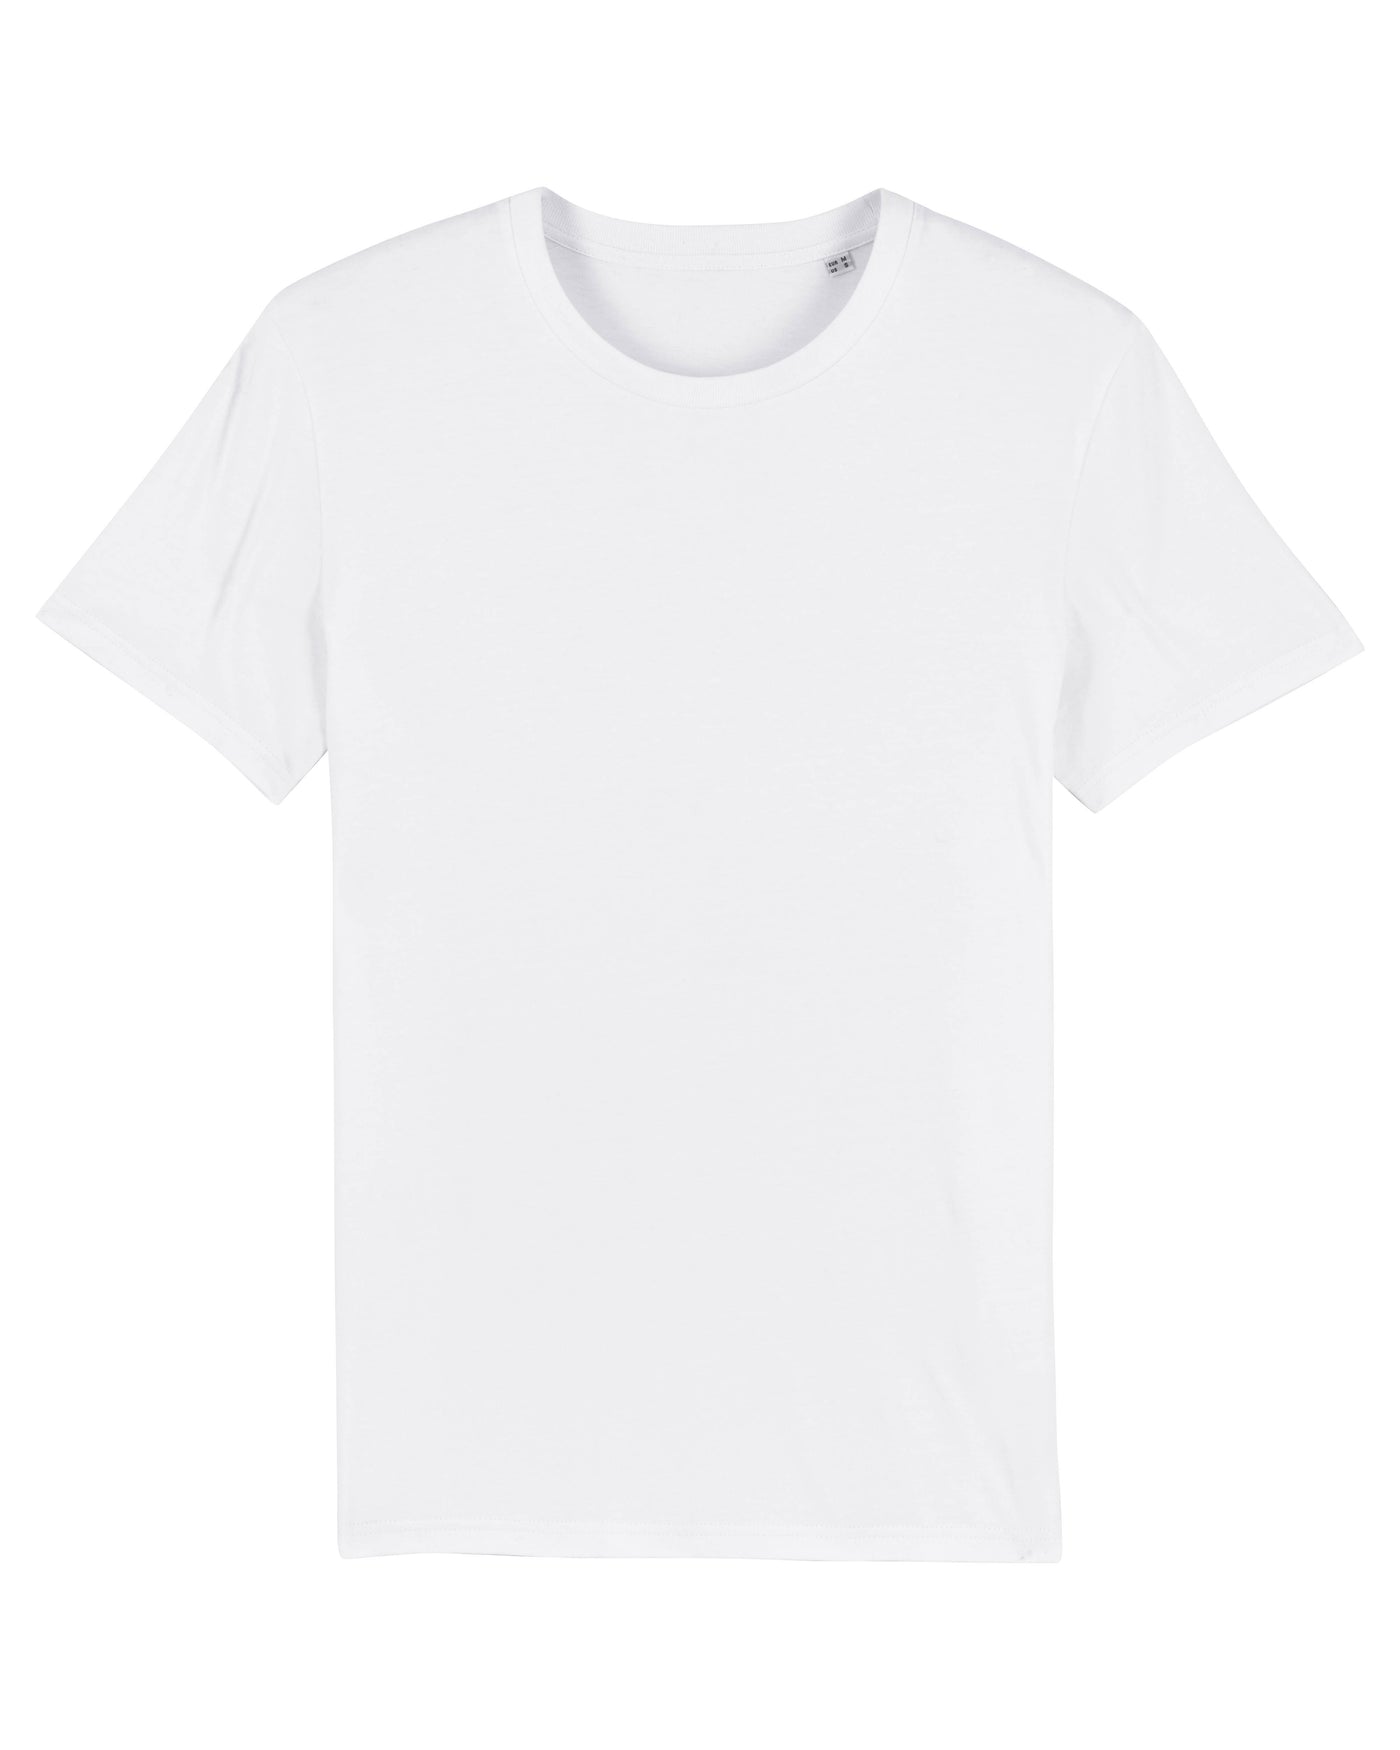 Unisex Team T-Shirt (Customized)